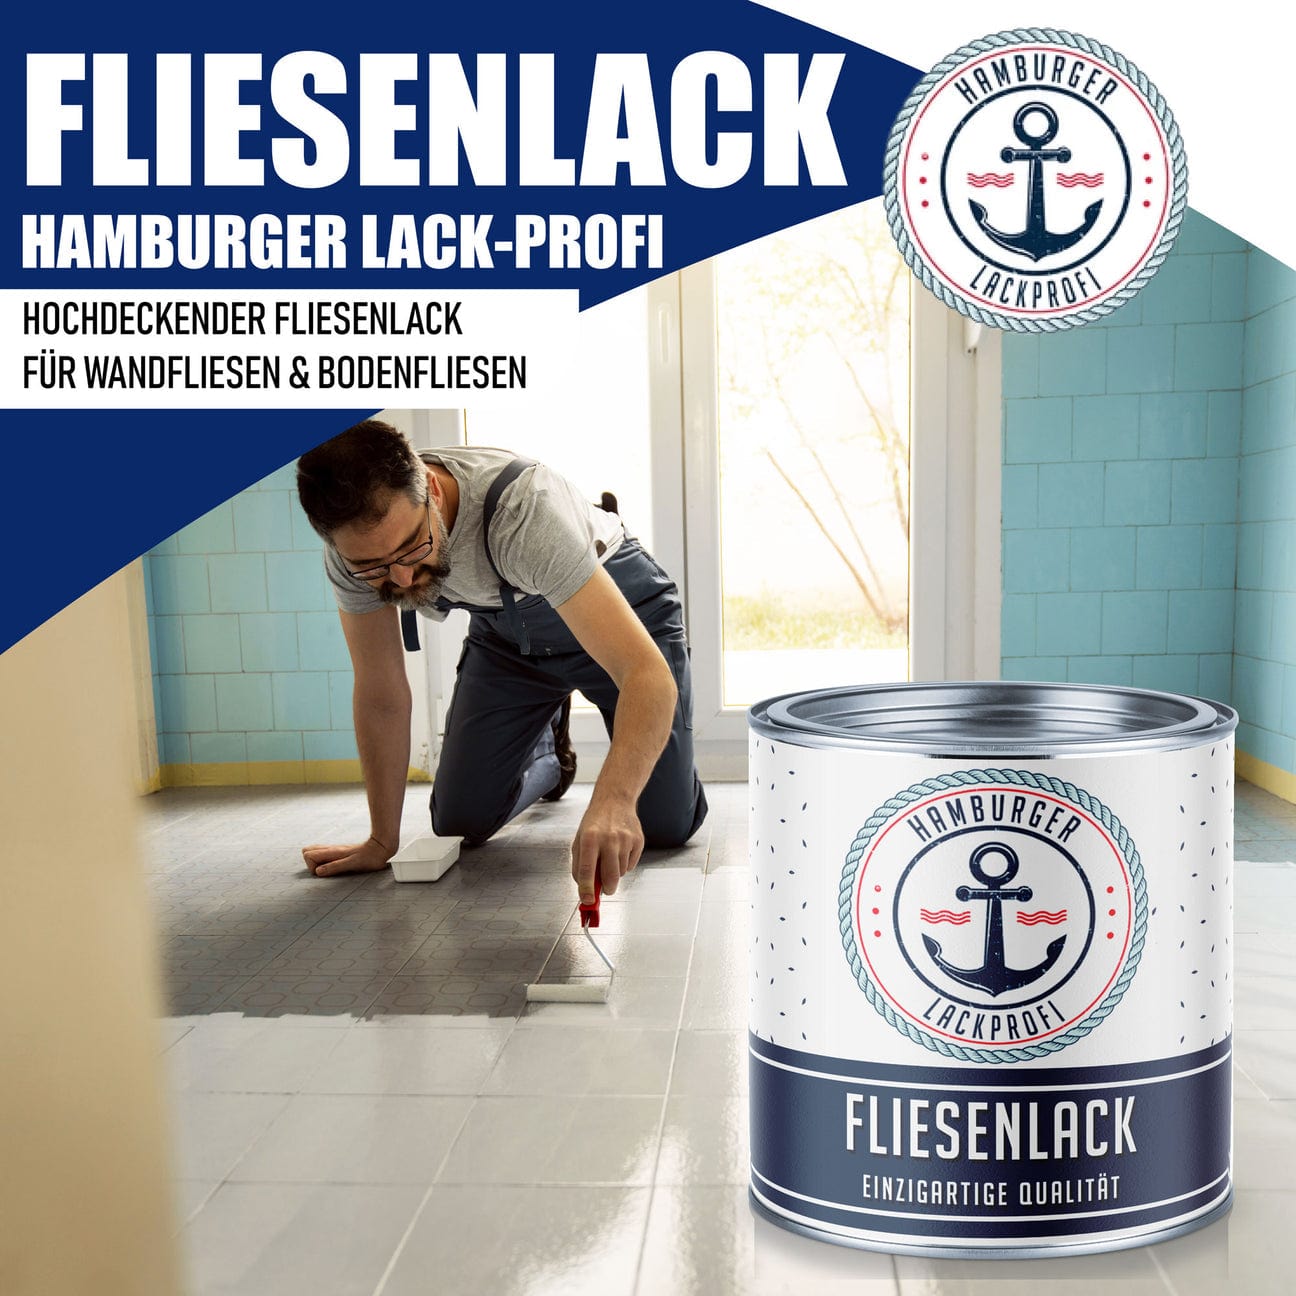 Hamburger Lack-Profi Hamburger Lack-Profi Fliesenlack Basaltgrau RAL 7012 - hochdeckende Fliesenfarbe Grau